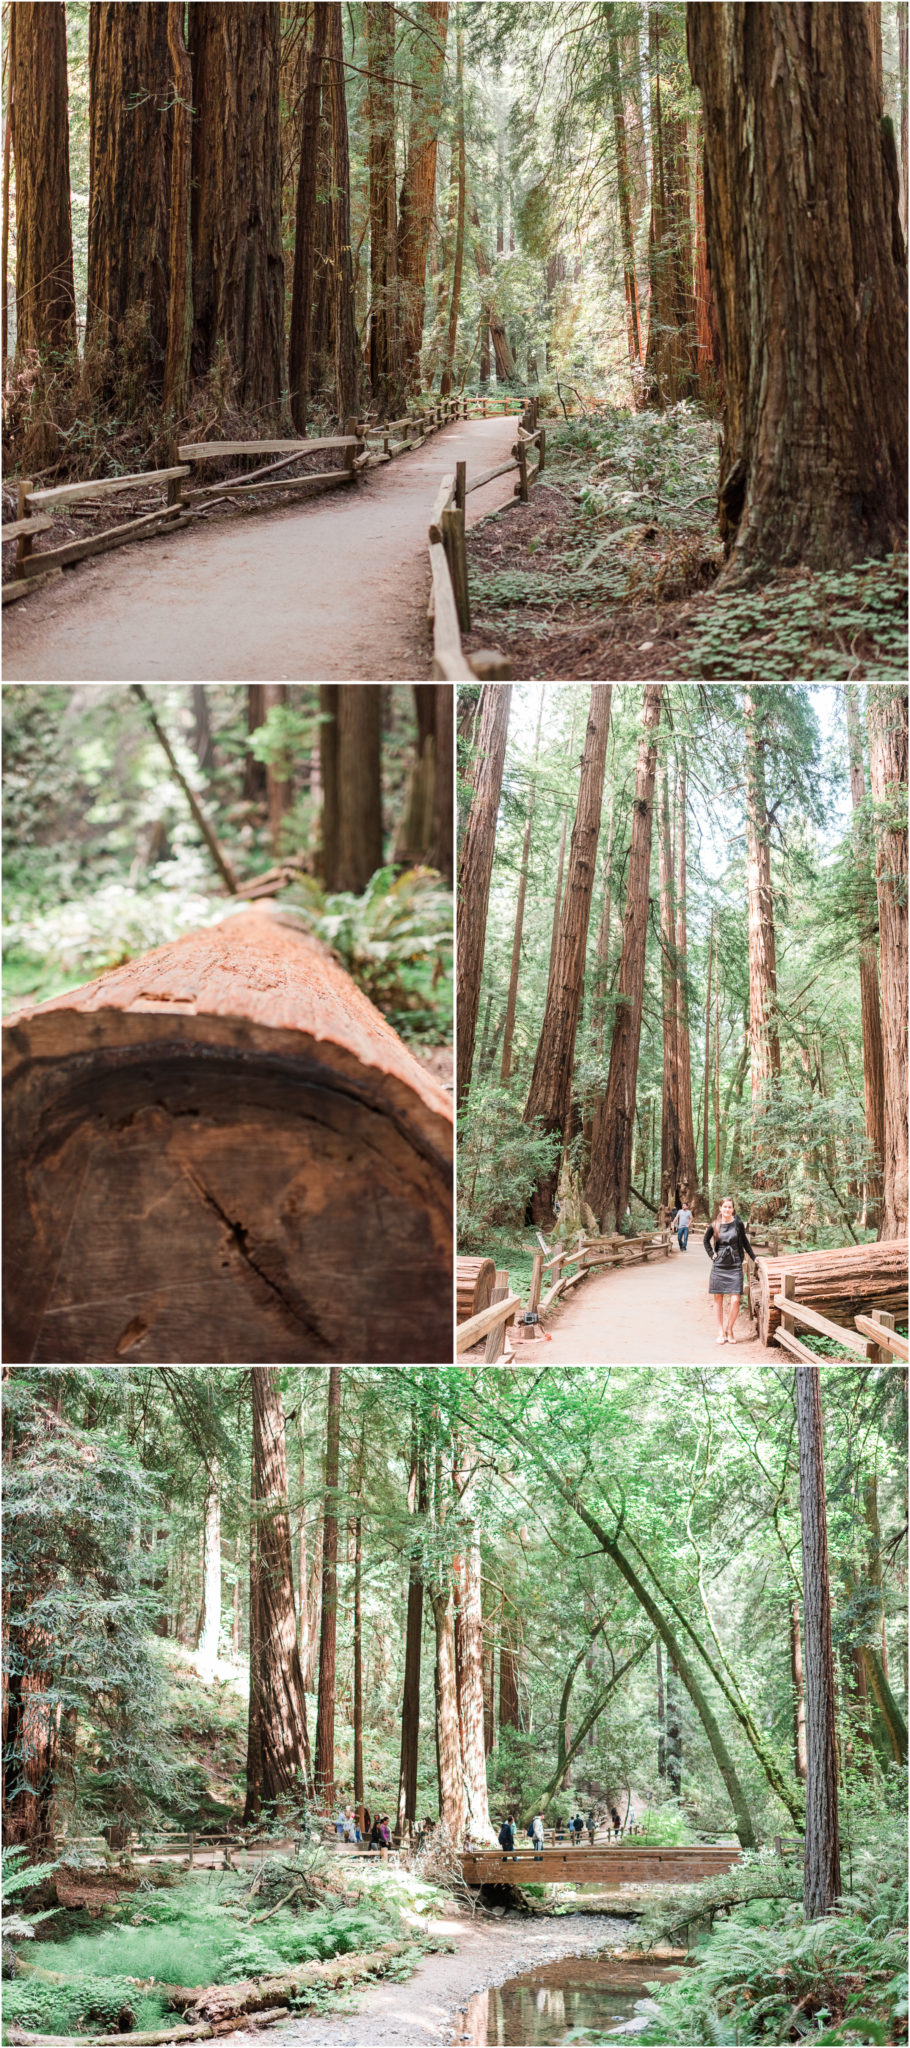 Muir Woods Redwoods in California